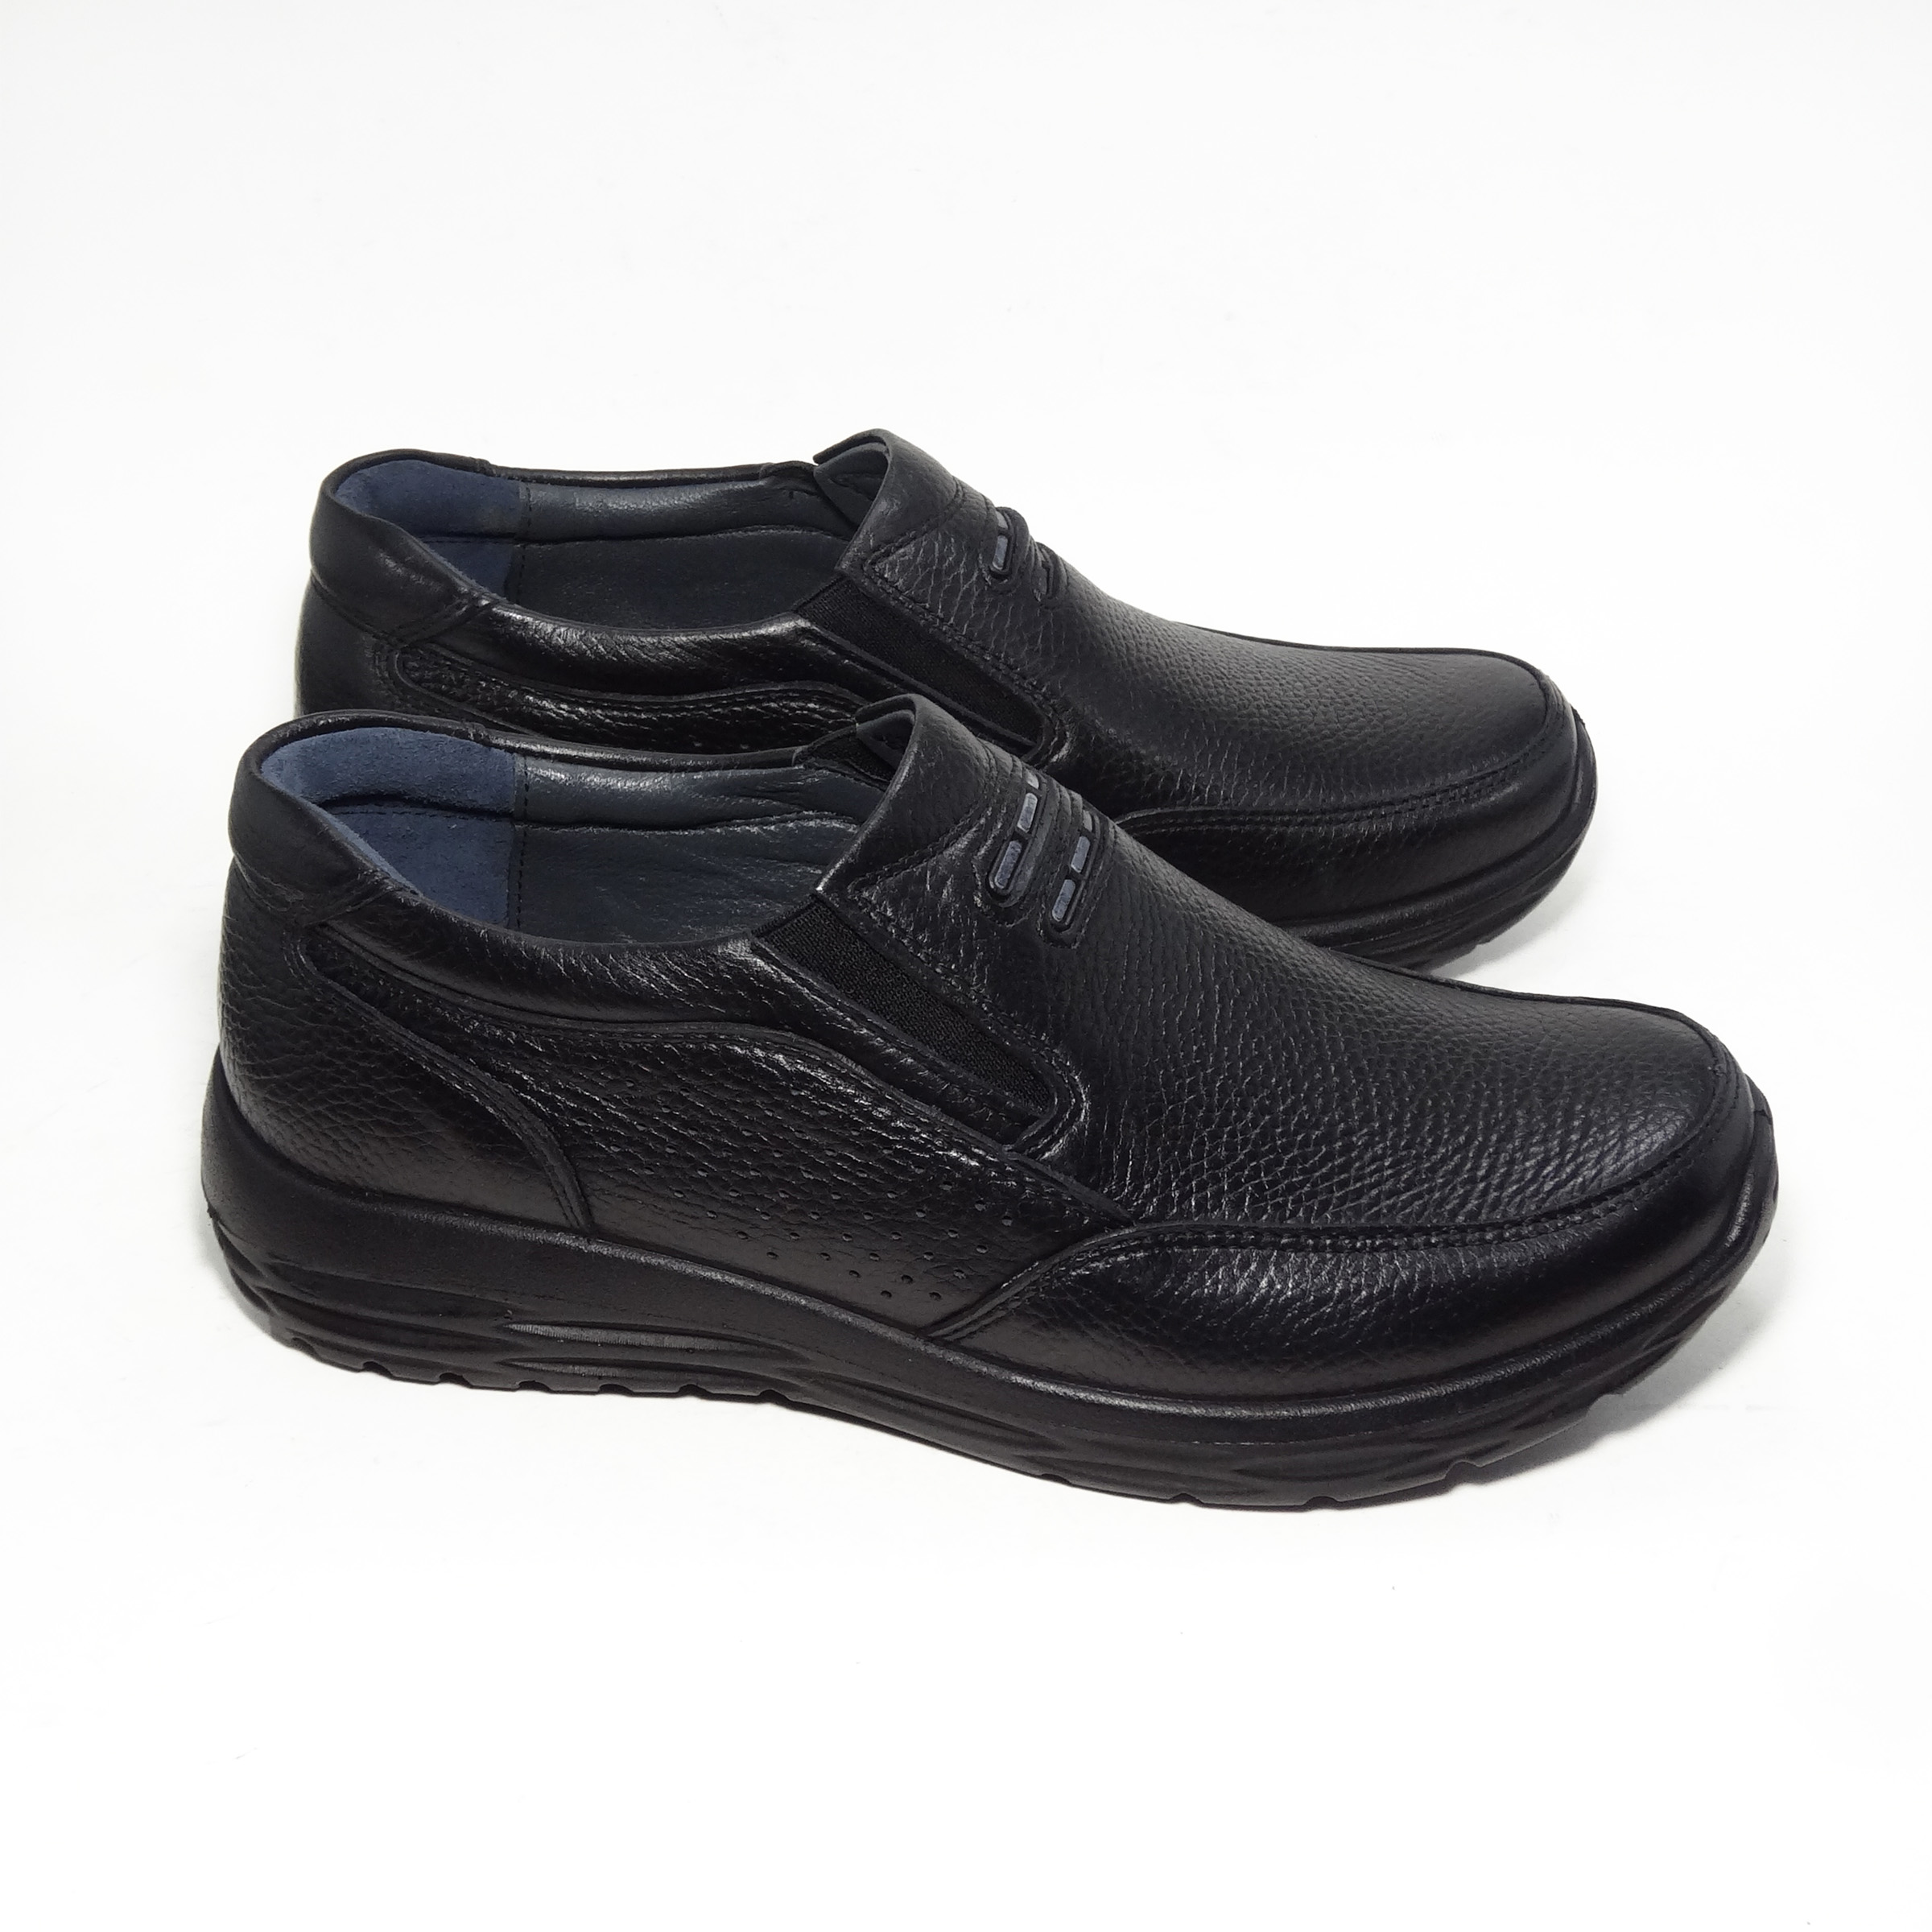 کفش روزمره مردانه مدل Forex کد 431 -  - 5